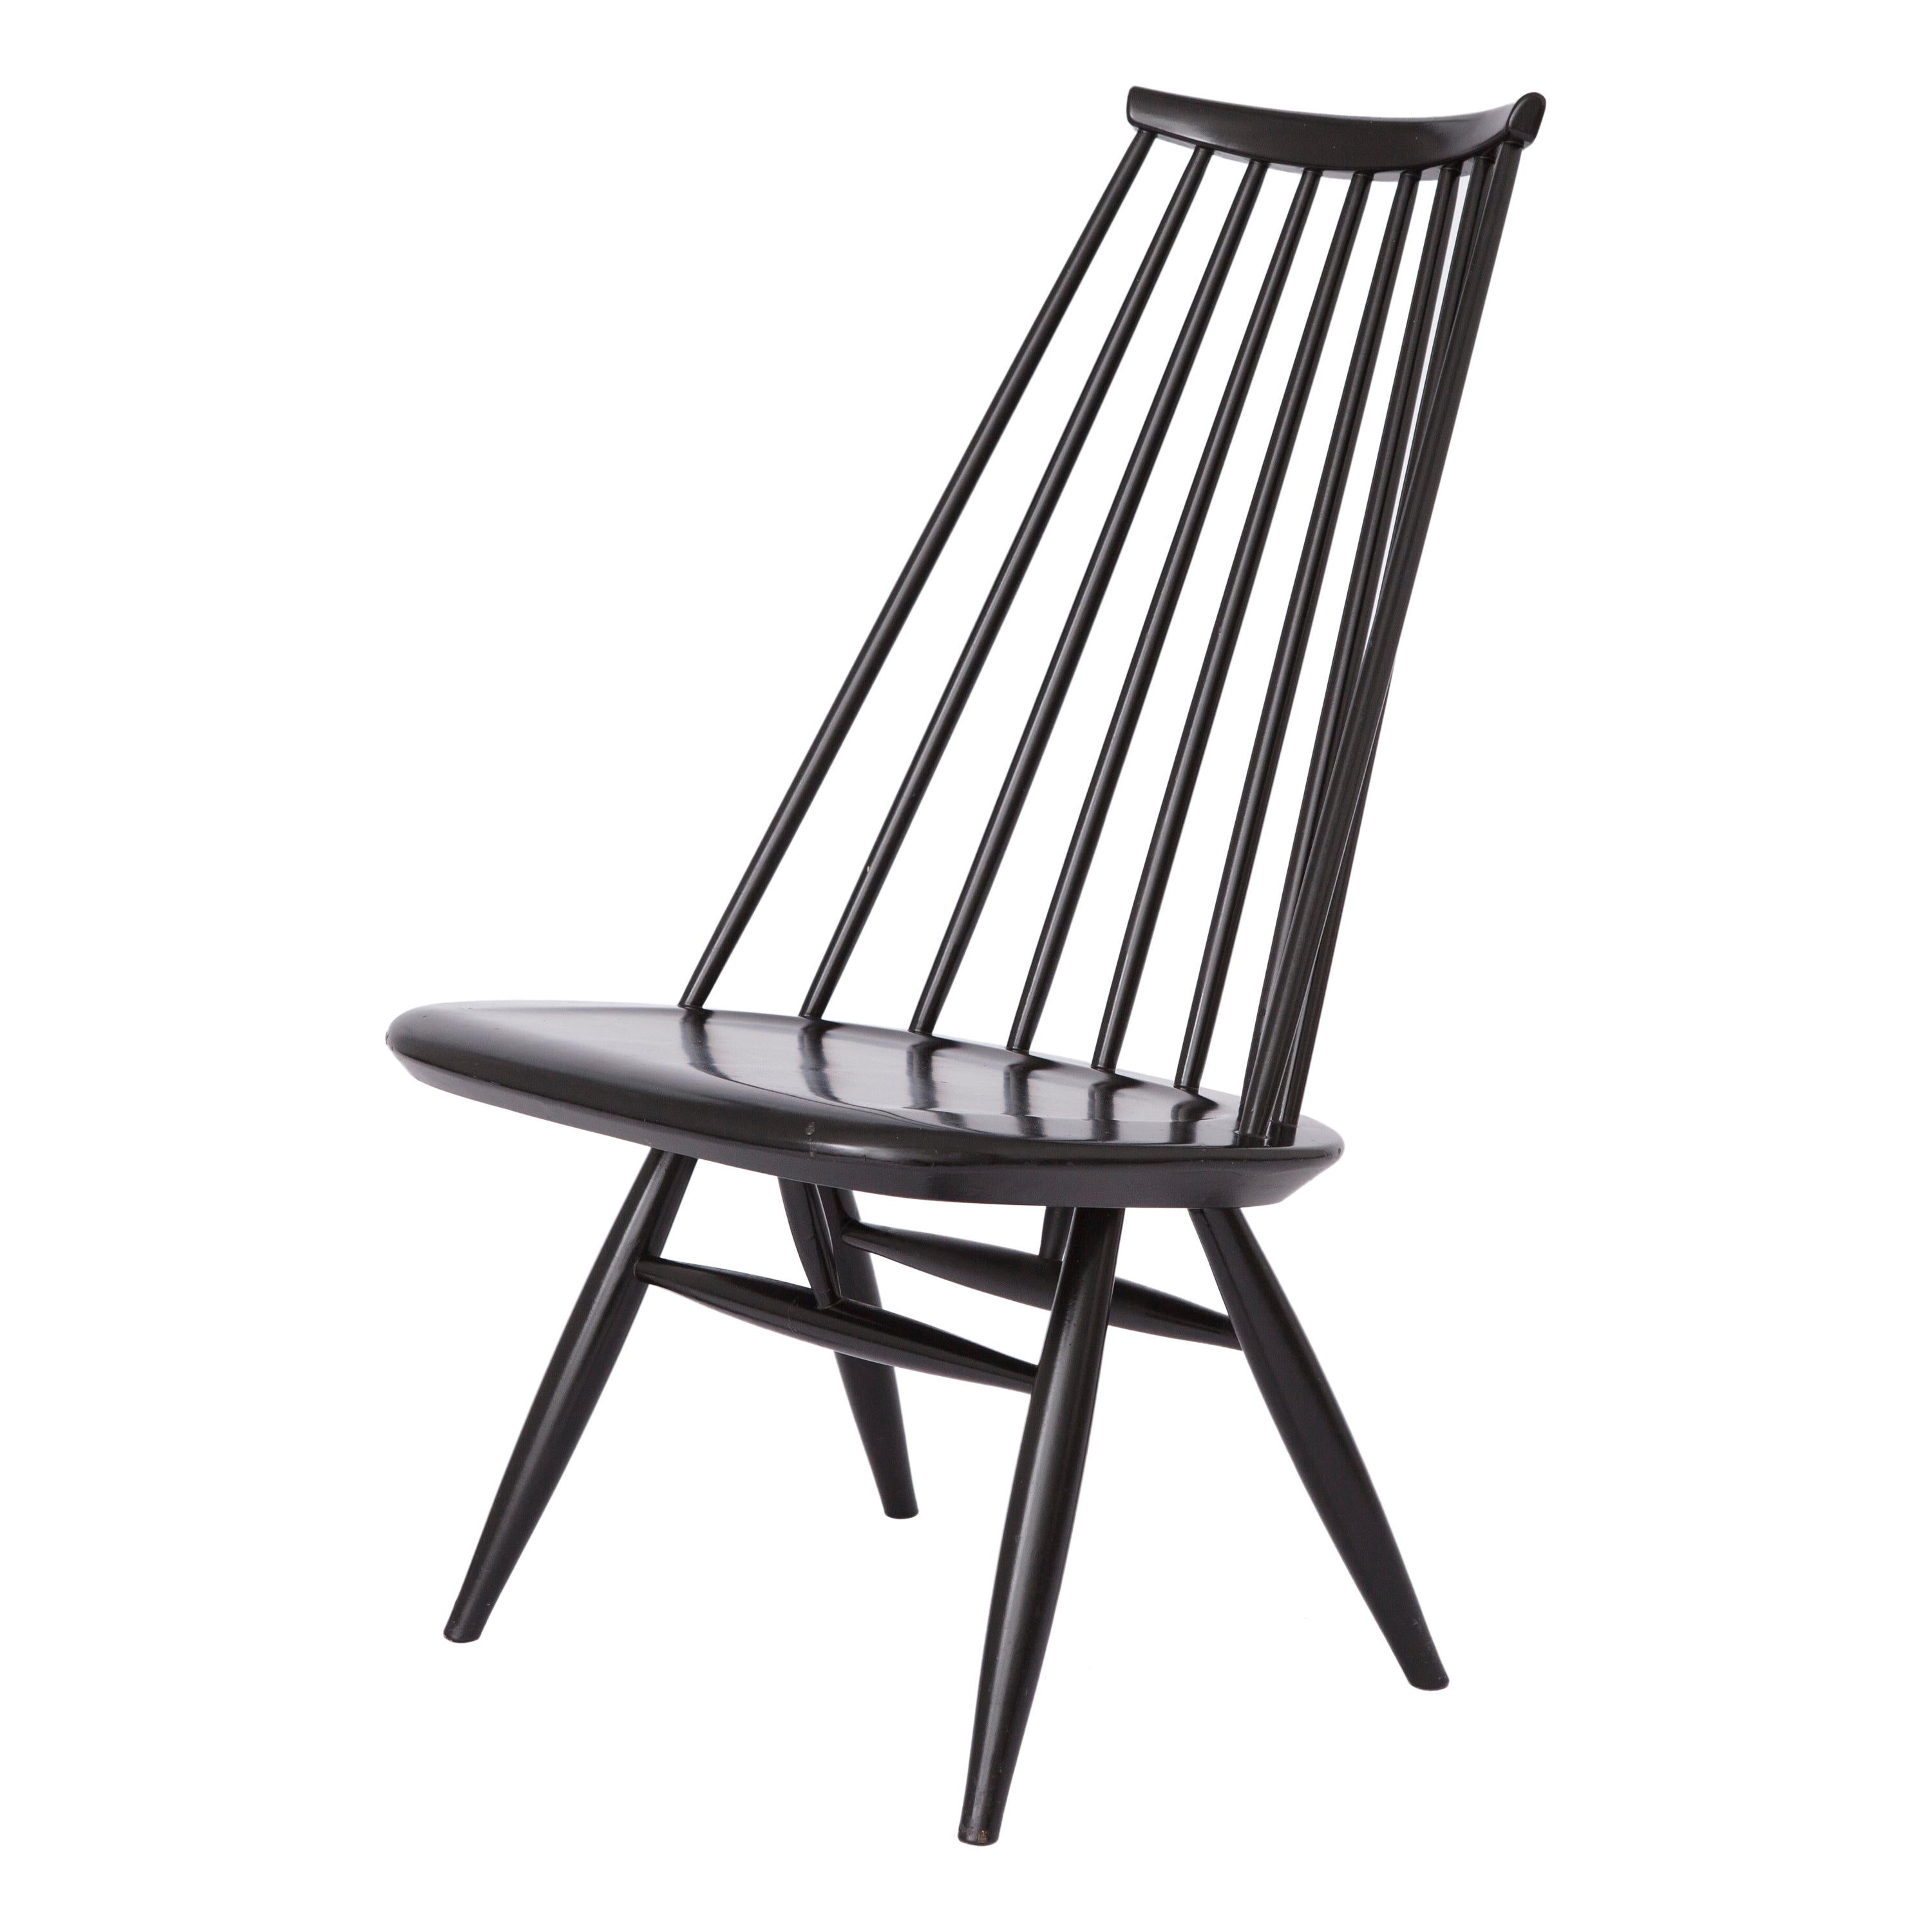 Mademoiselle Lounge Chair by Ilmari Tapiovaara for ASKO 1960s